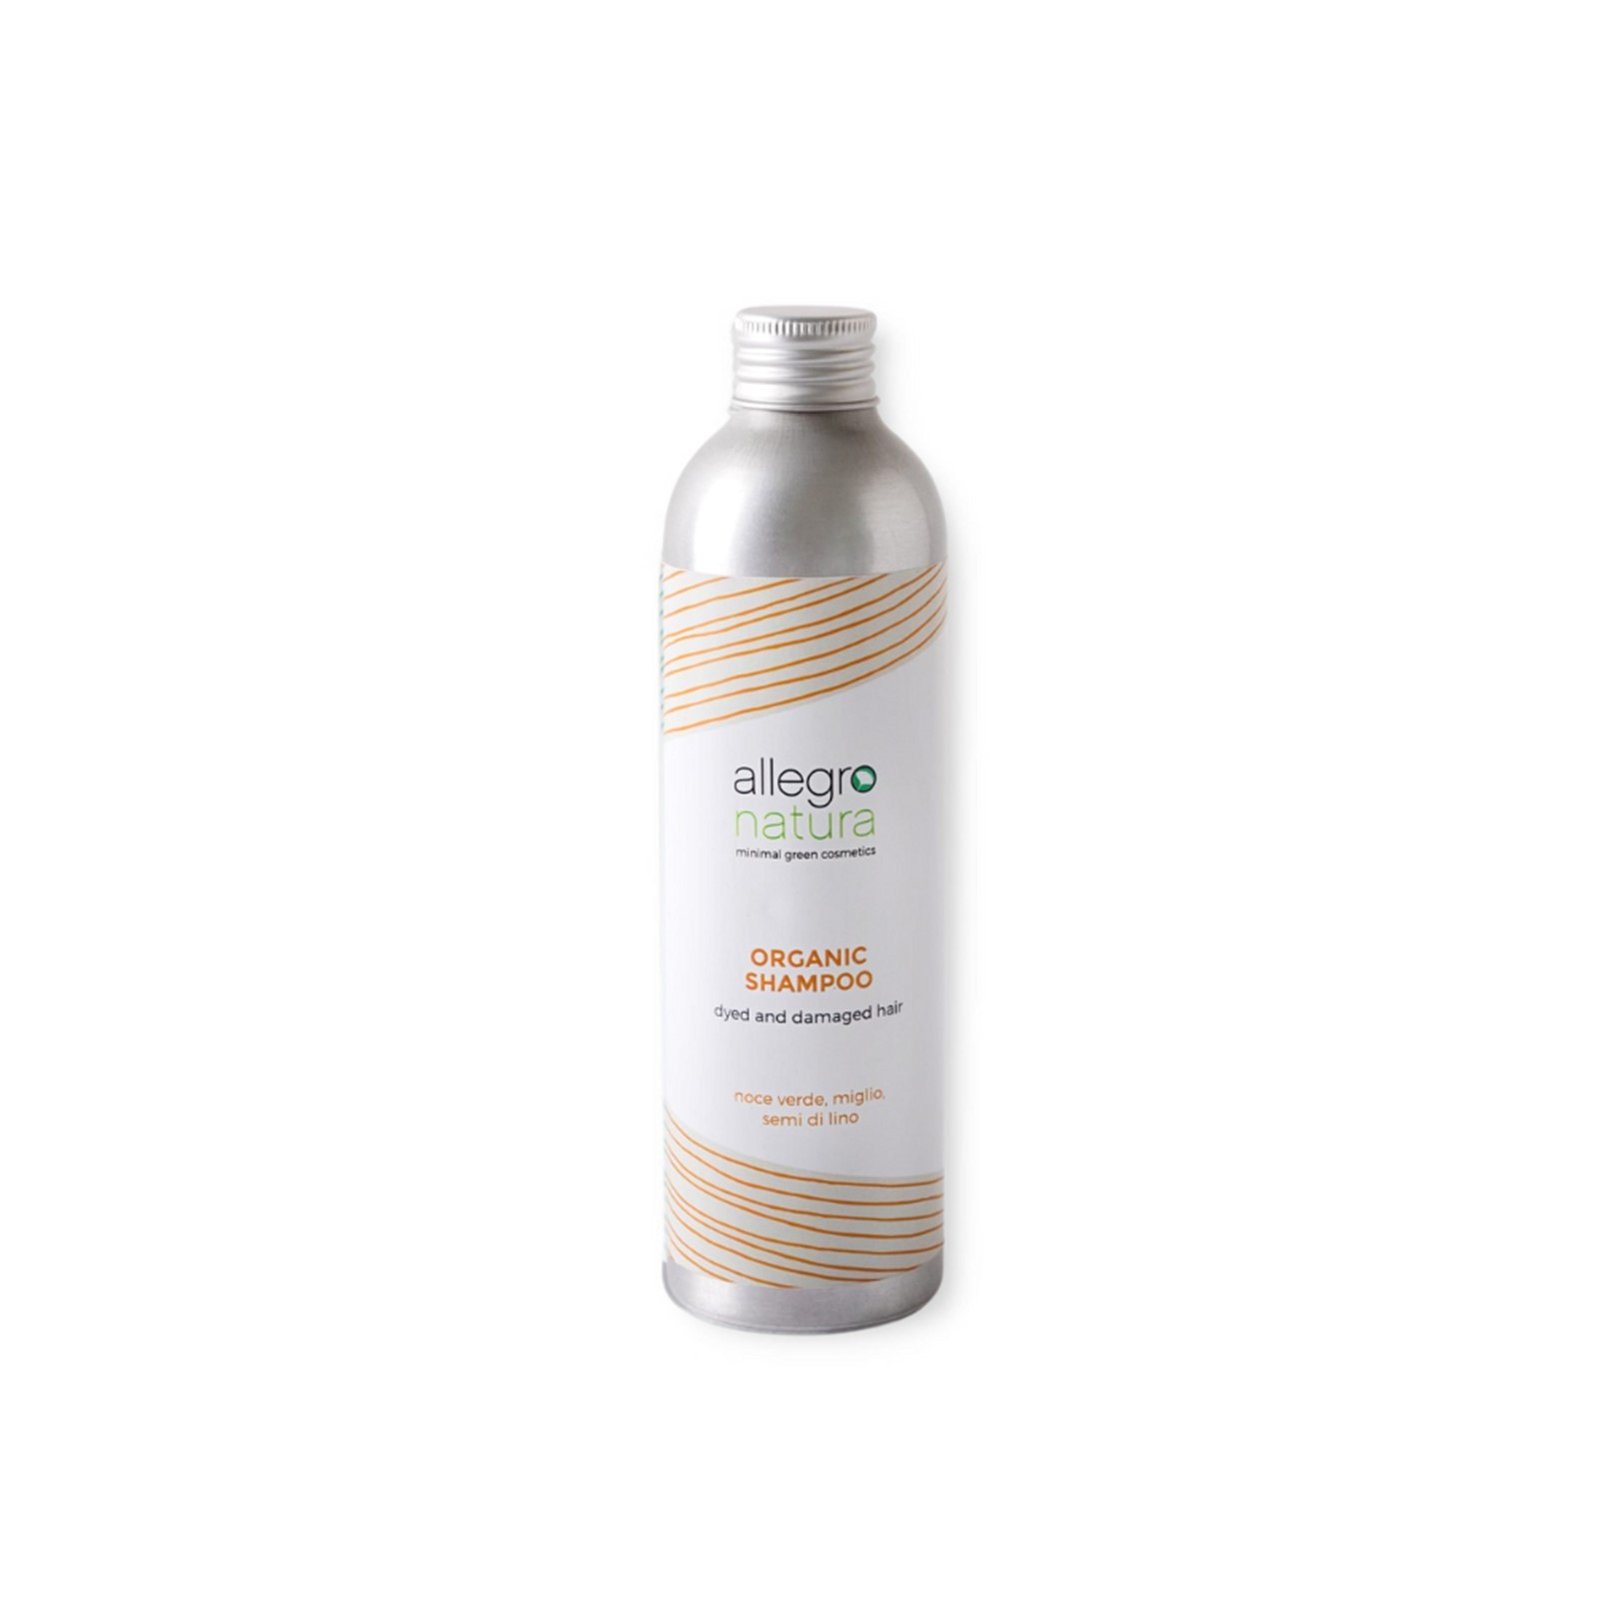 Allegro Natura Organic Shampoo For Dyed And Damaged Hair 250ml (8.45 fl oz)